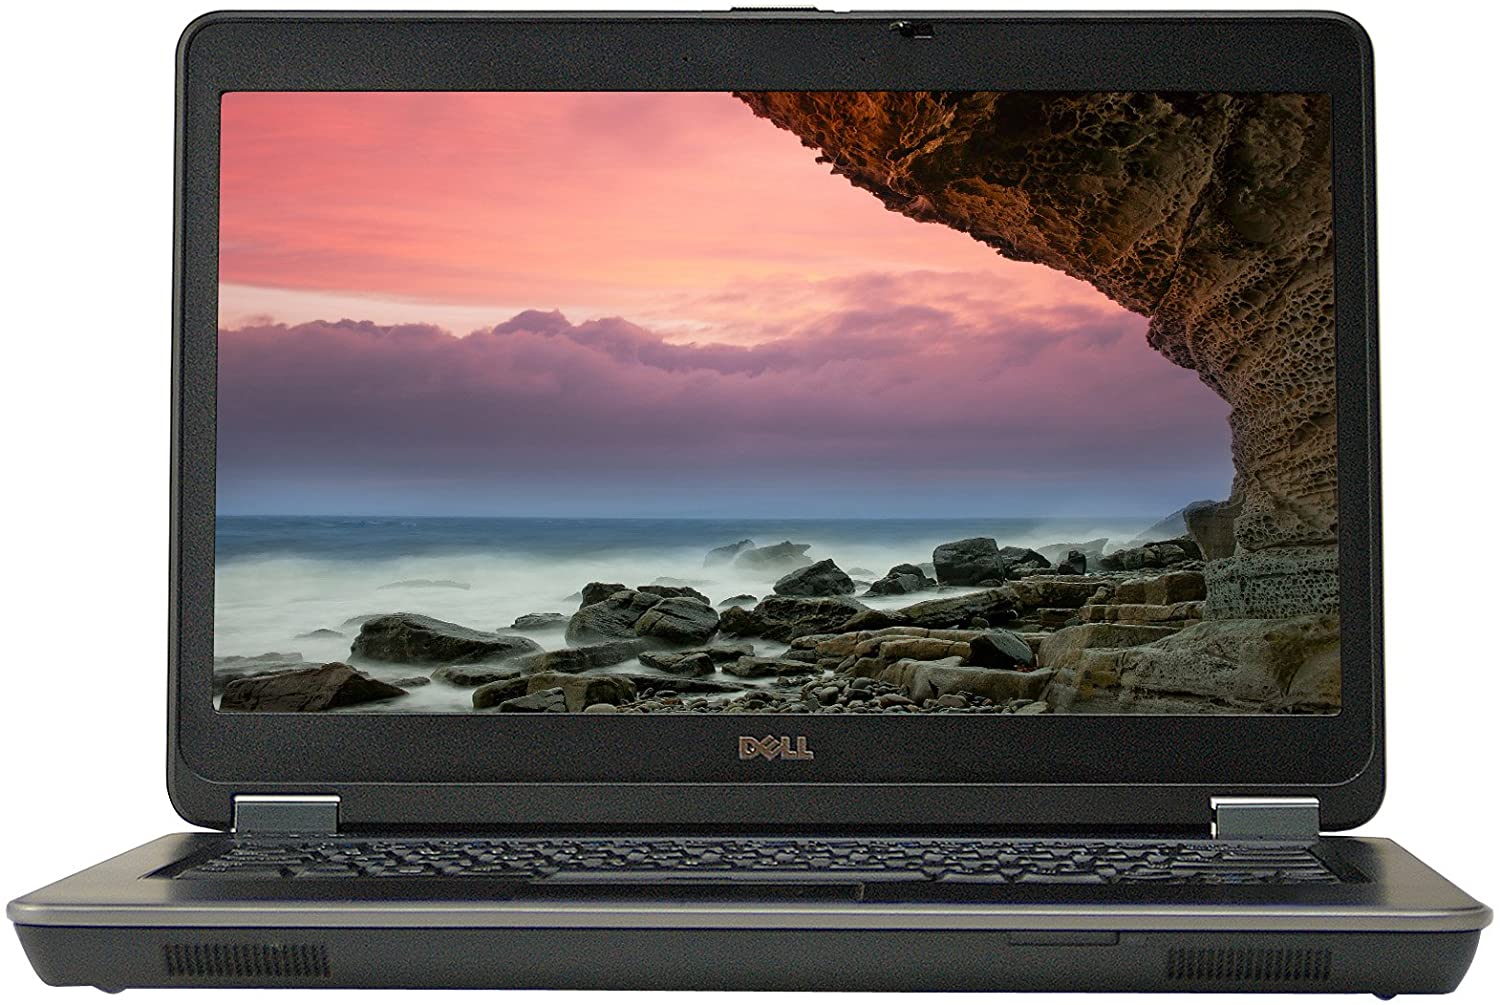 Dell Laptop Latitude E6440 14in Intel Core i5 4300M 2.6GHz 8GB RAM 500GB HD Webcam Windows 10 Professional (Renewed)